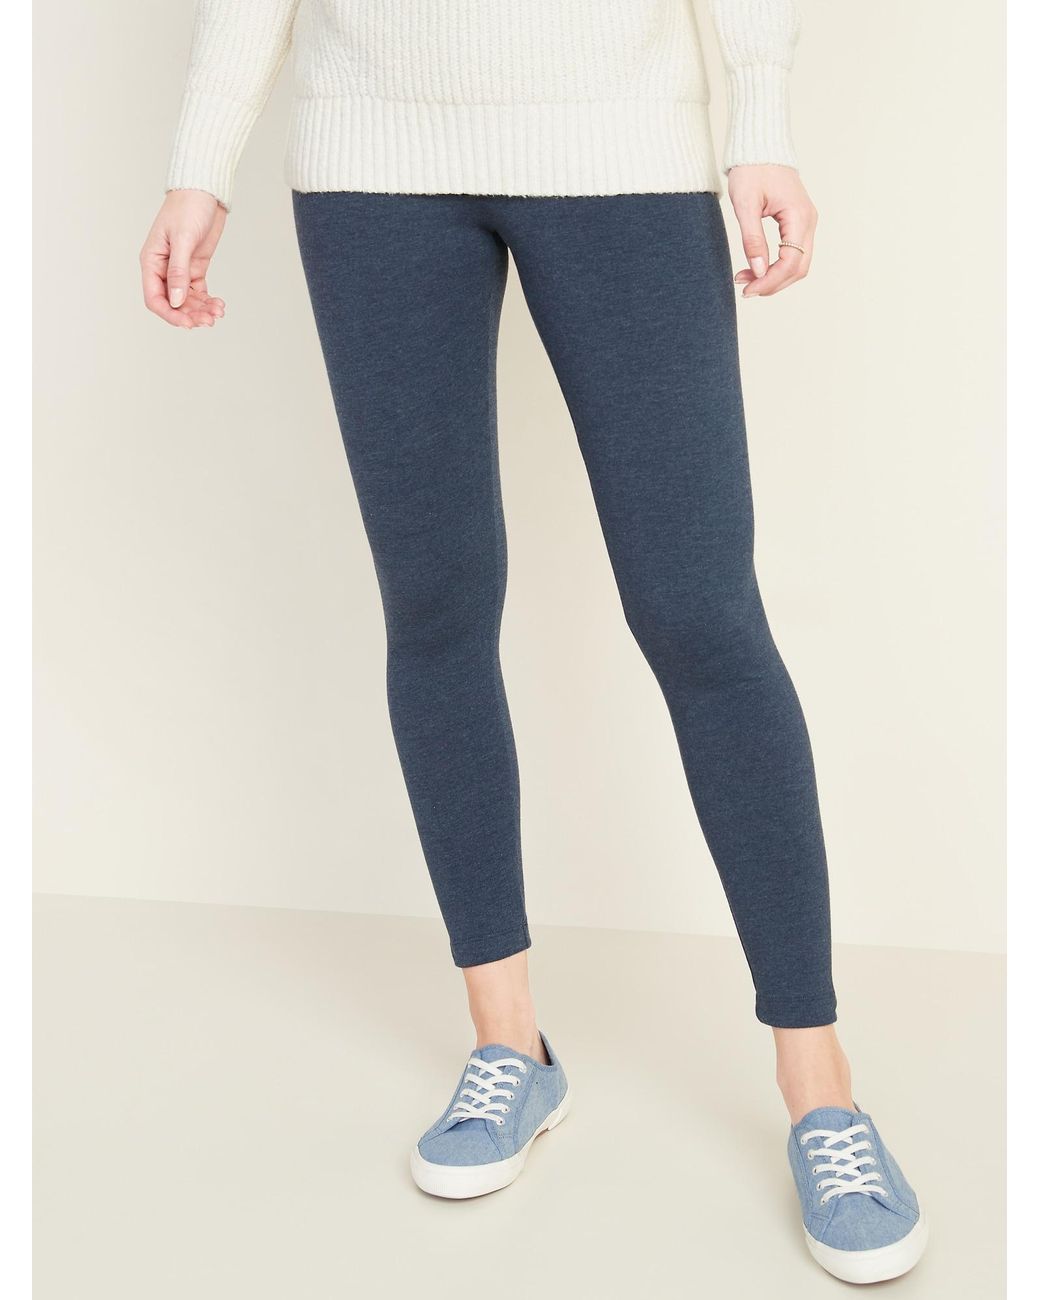 Cotton Jersey Leggings - Dark blue - Ladies